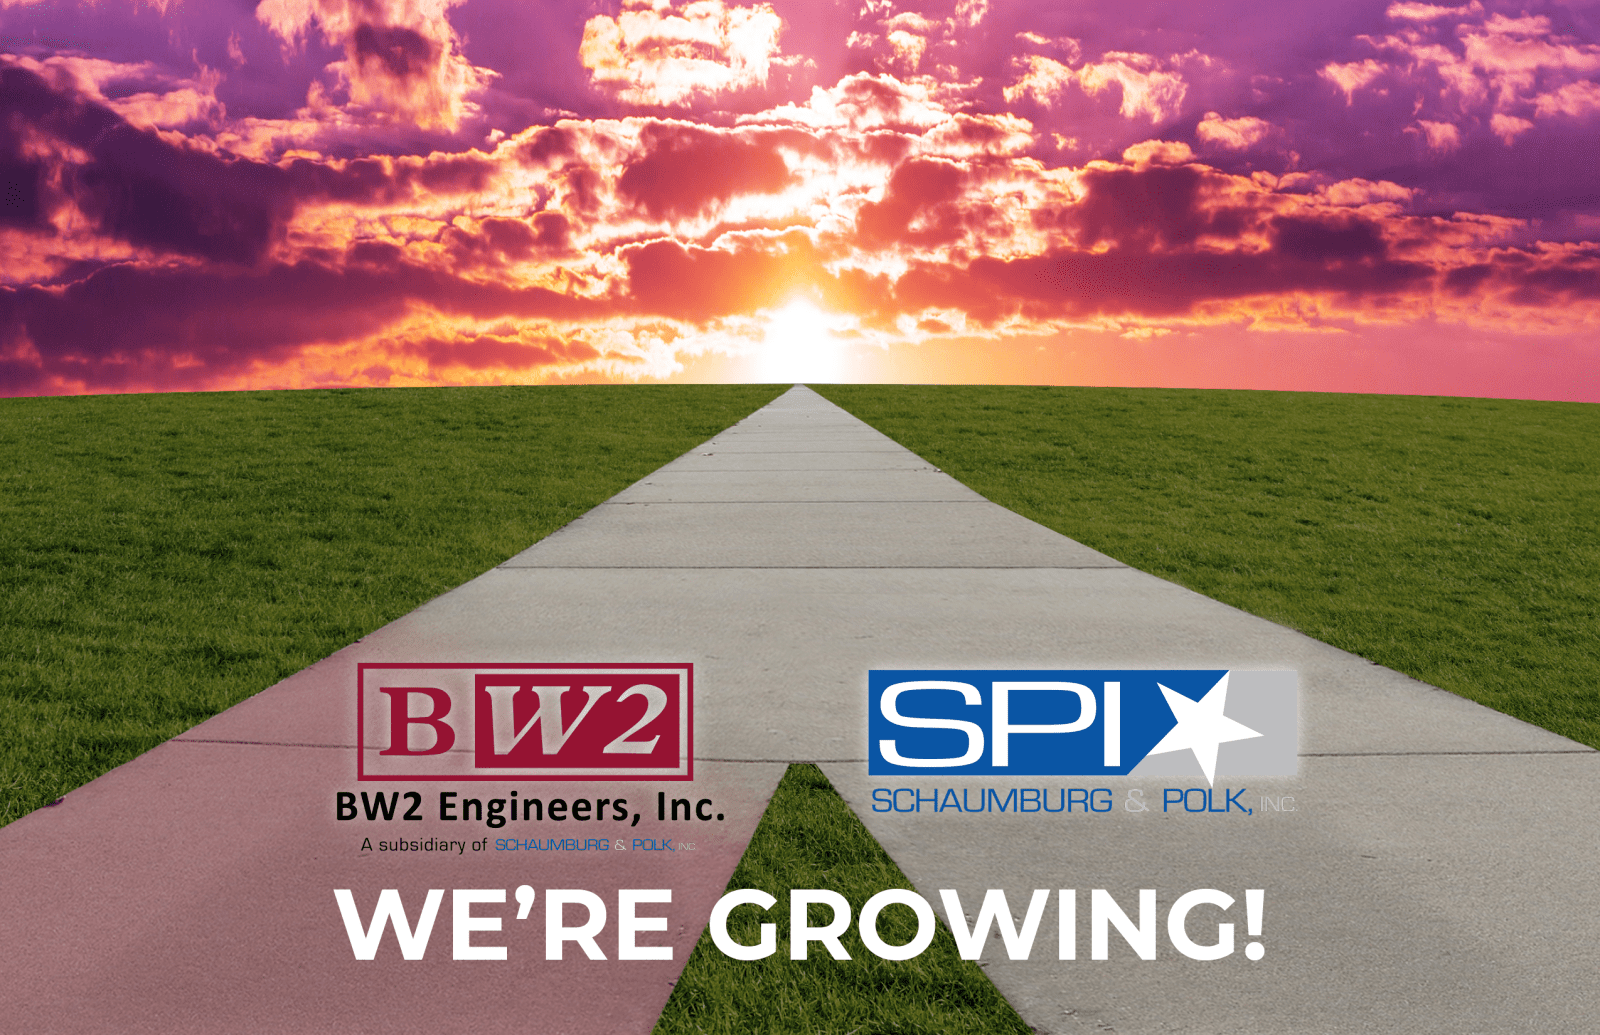 Schaumburg Polk Inc Announces Acquisition Of Bw2 Engineers Inc Spi Schaumburg Polk Inc